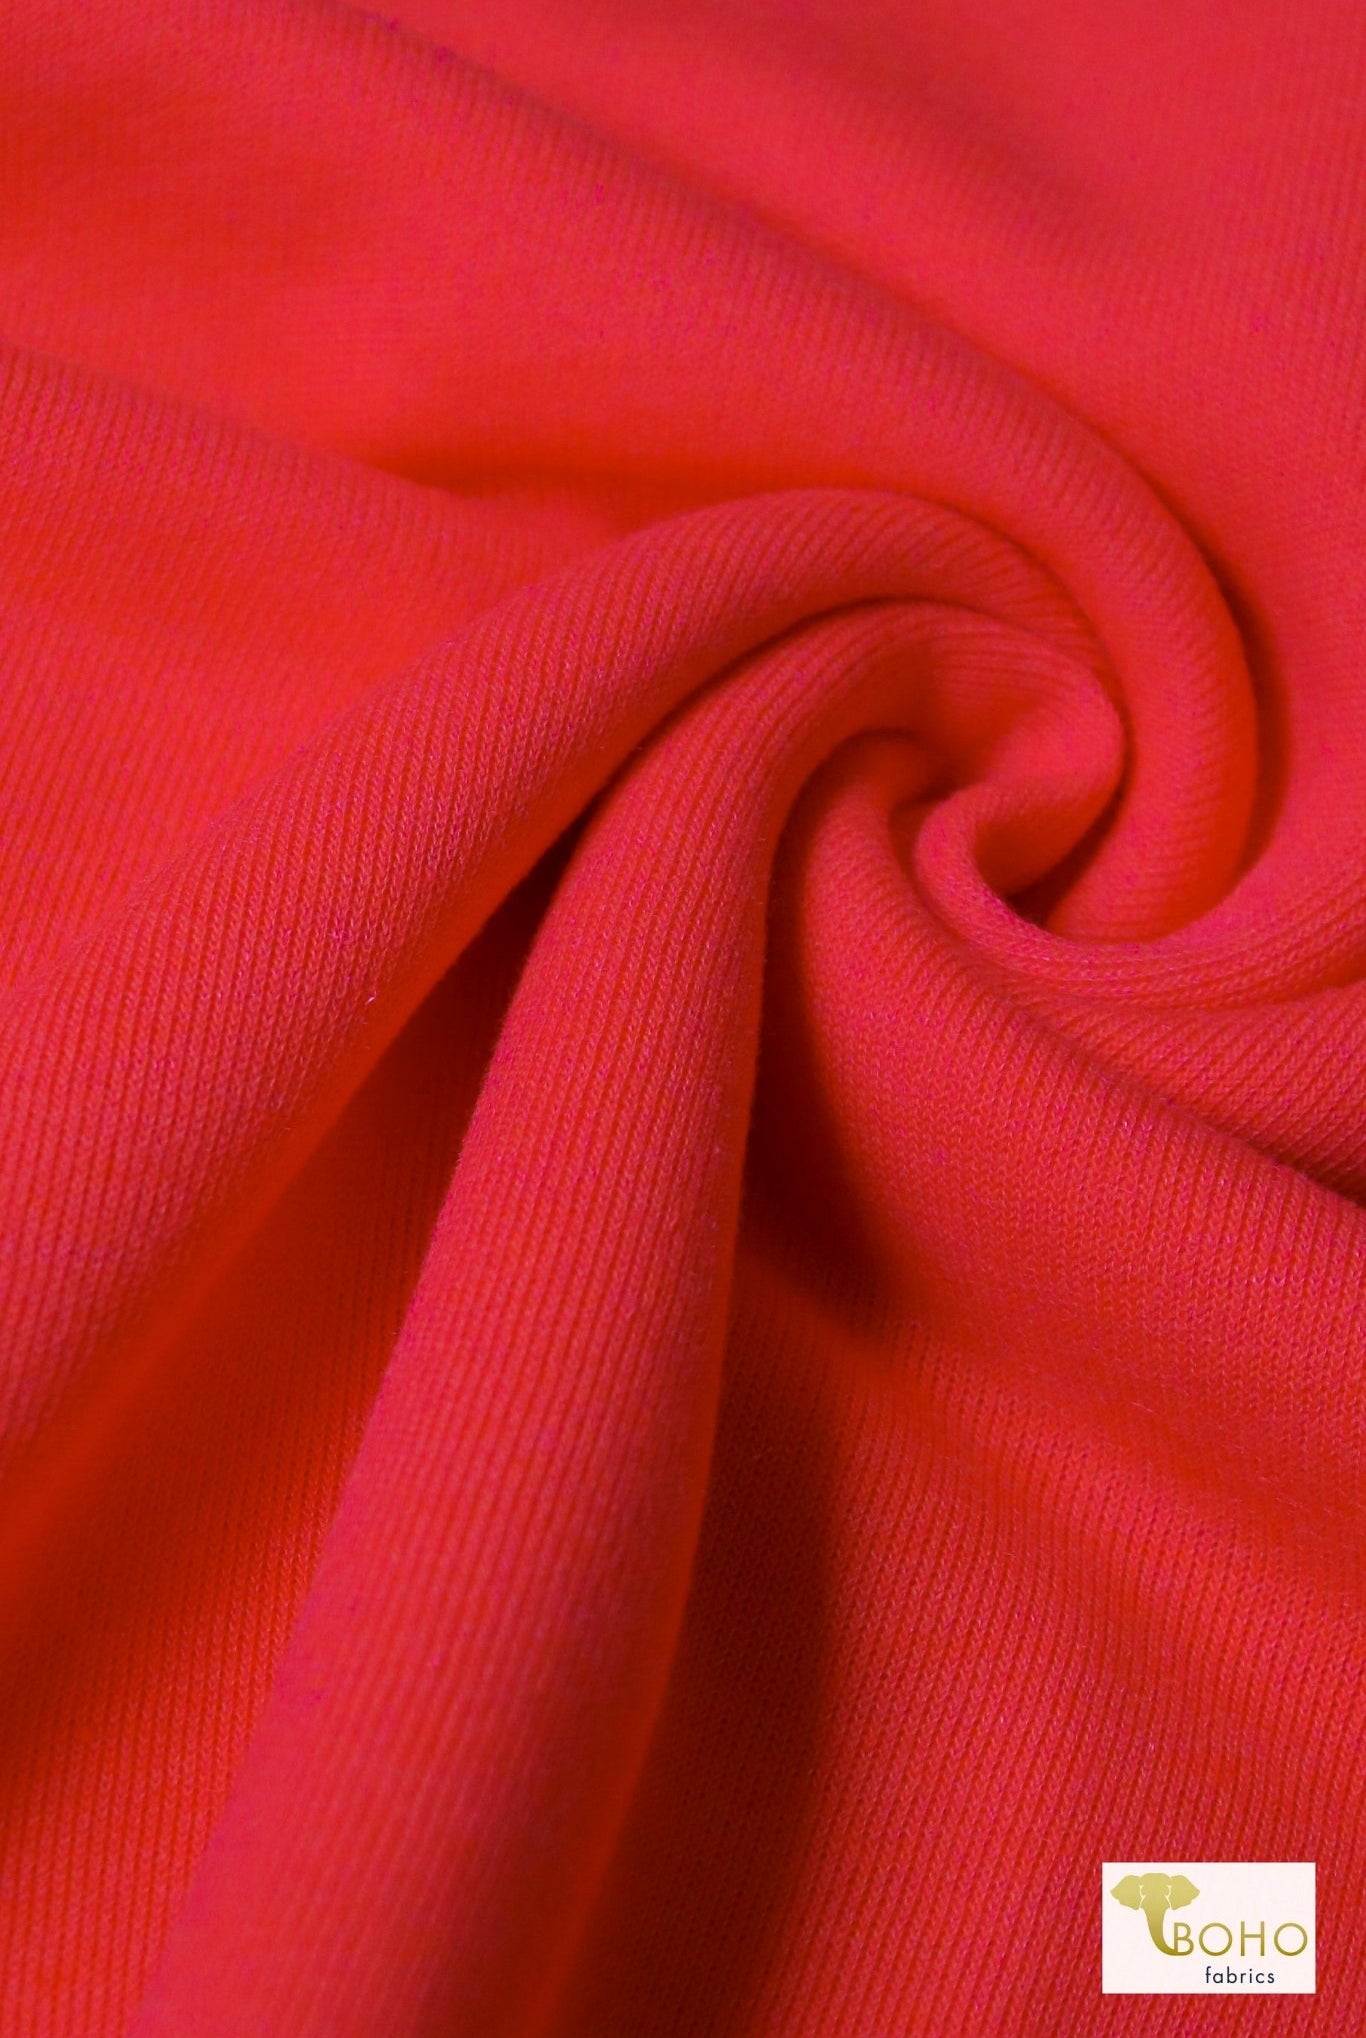 Sunset Orange-Red, Sweatshirt Fleece. - Boho Fabrics